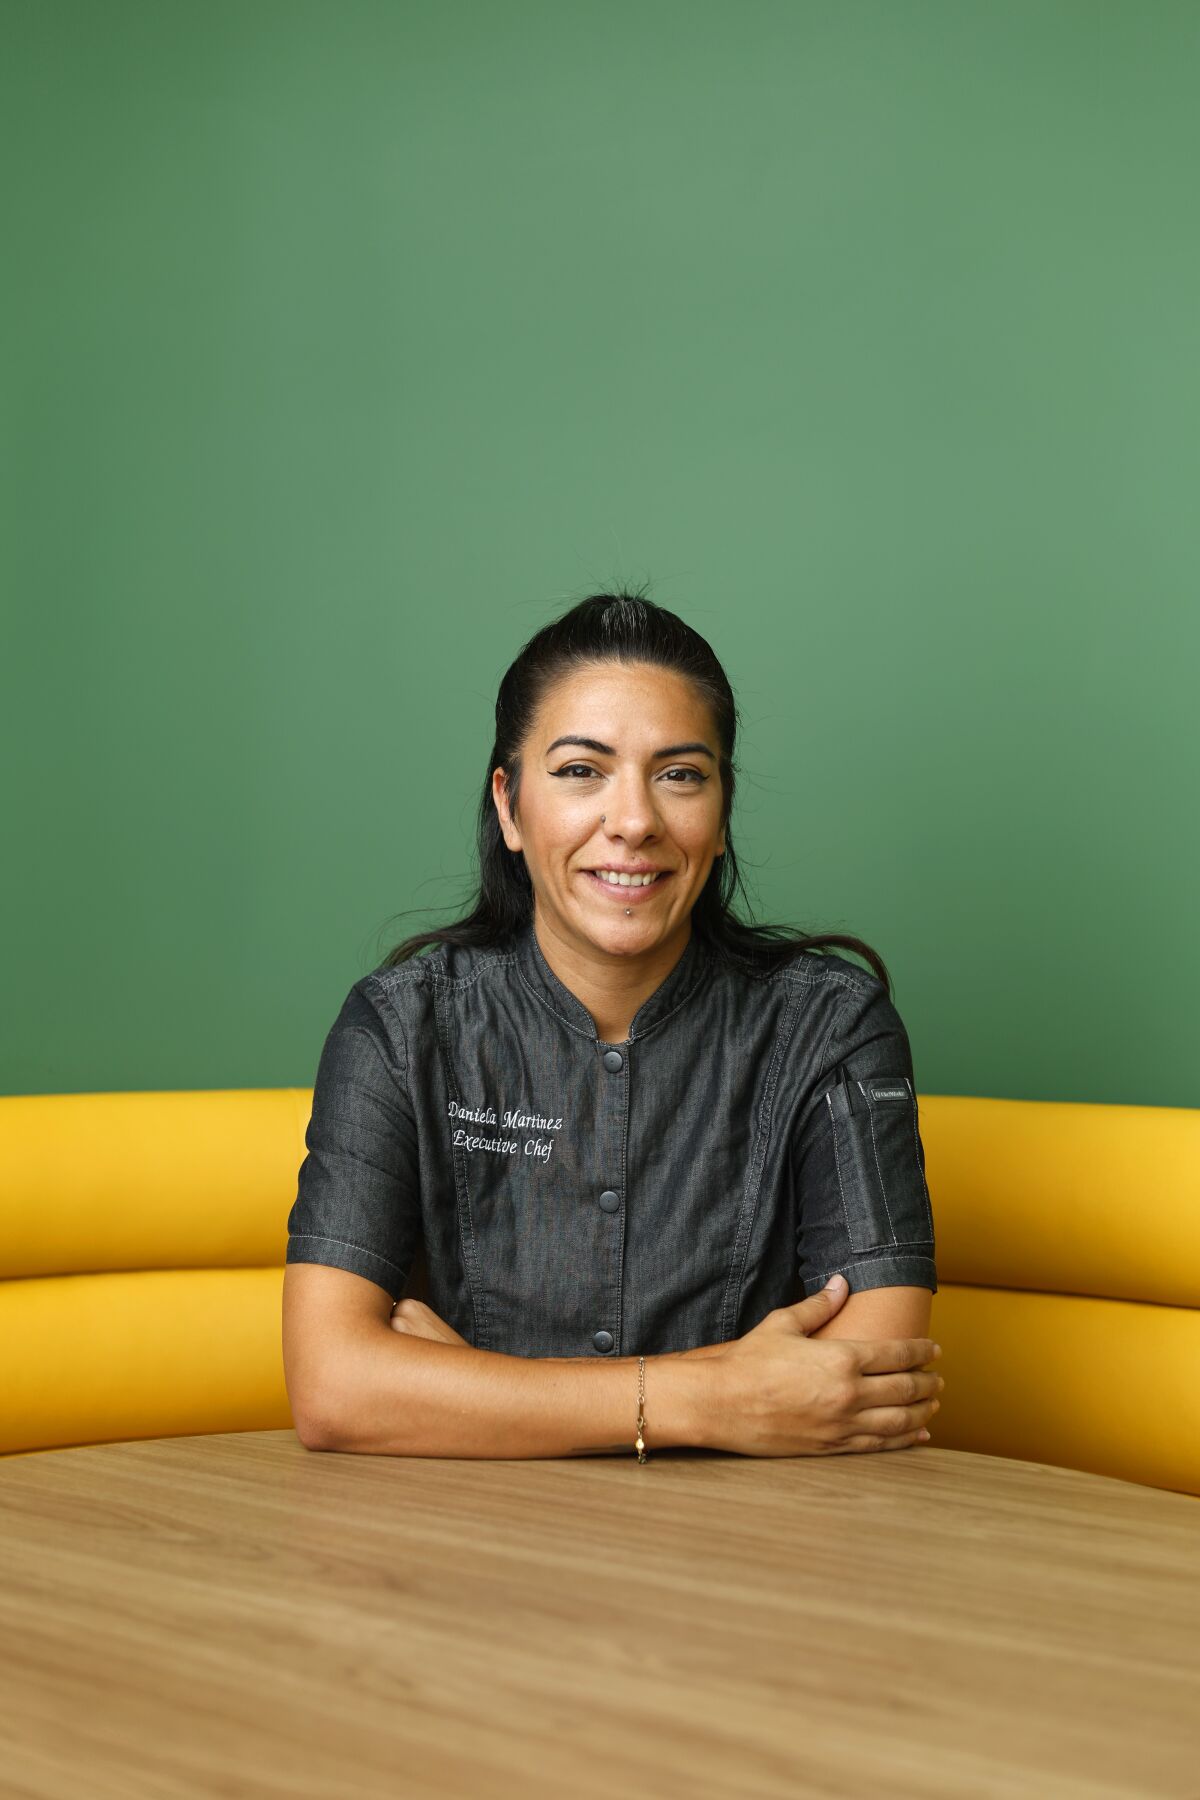 Chef Daniela Martinez on August 25, 2022 in San Diego.